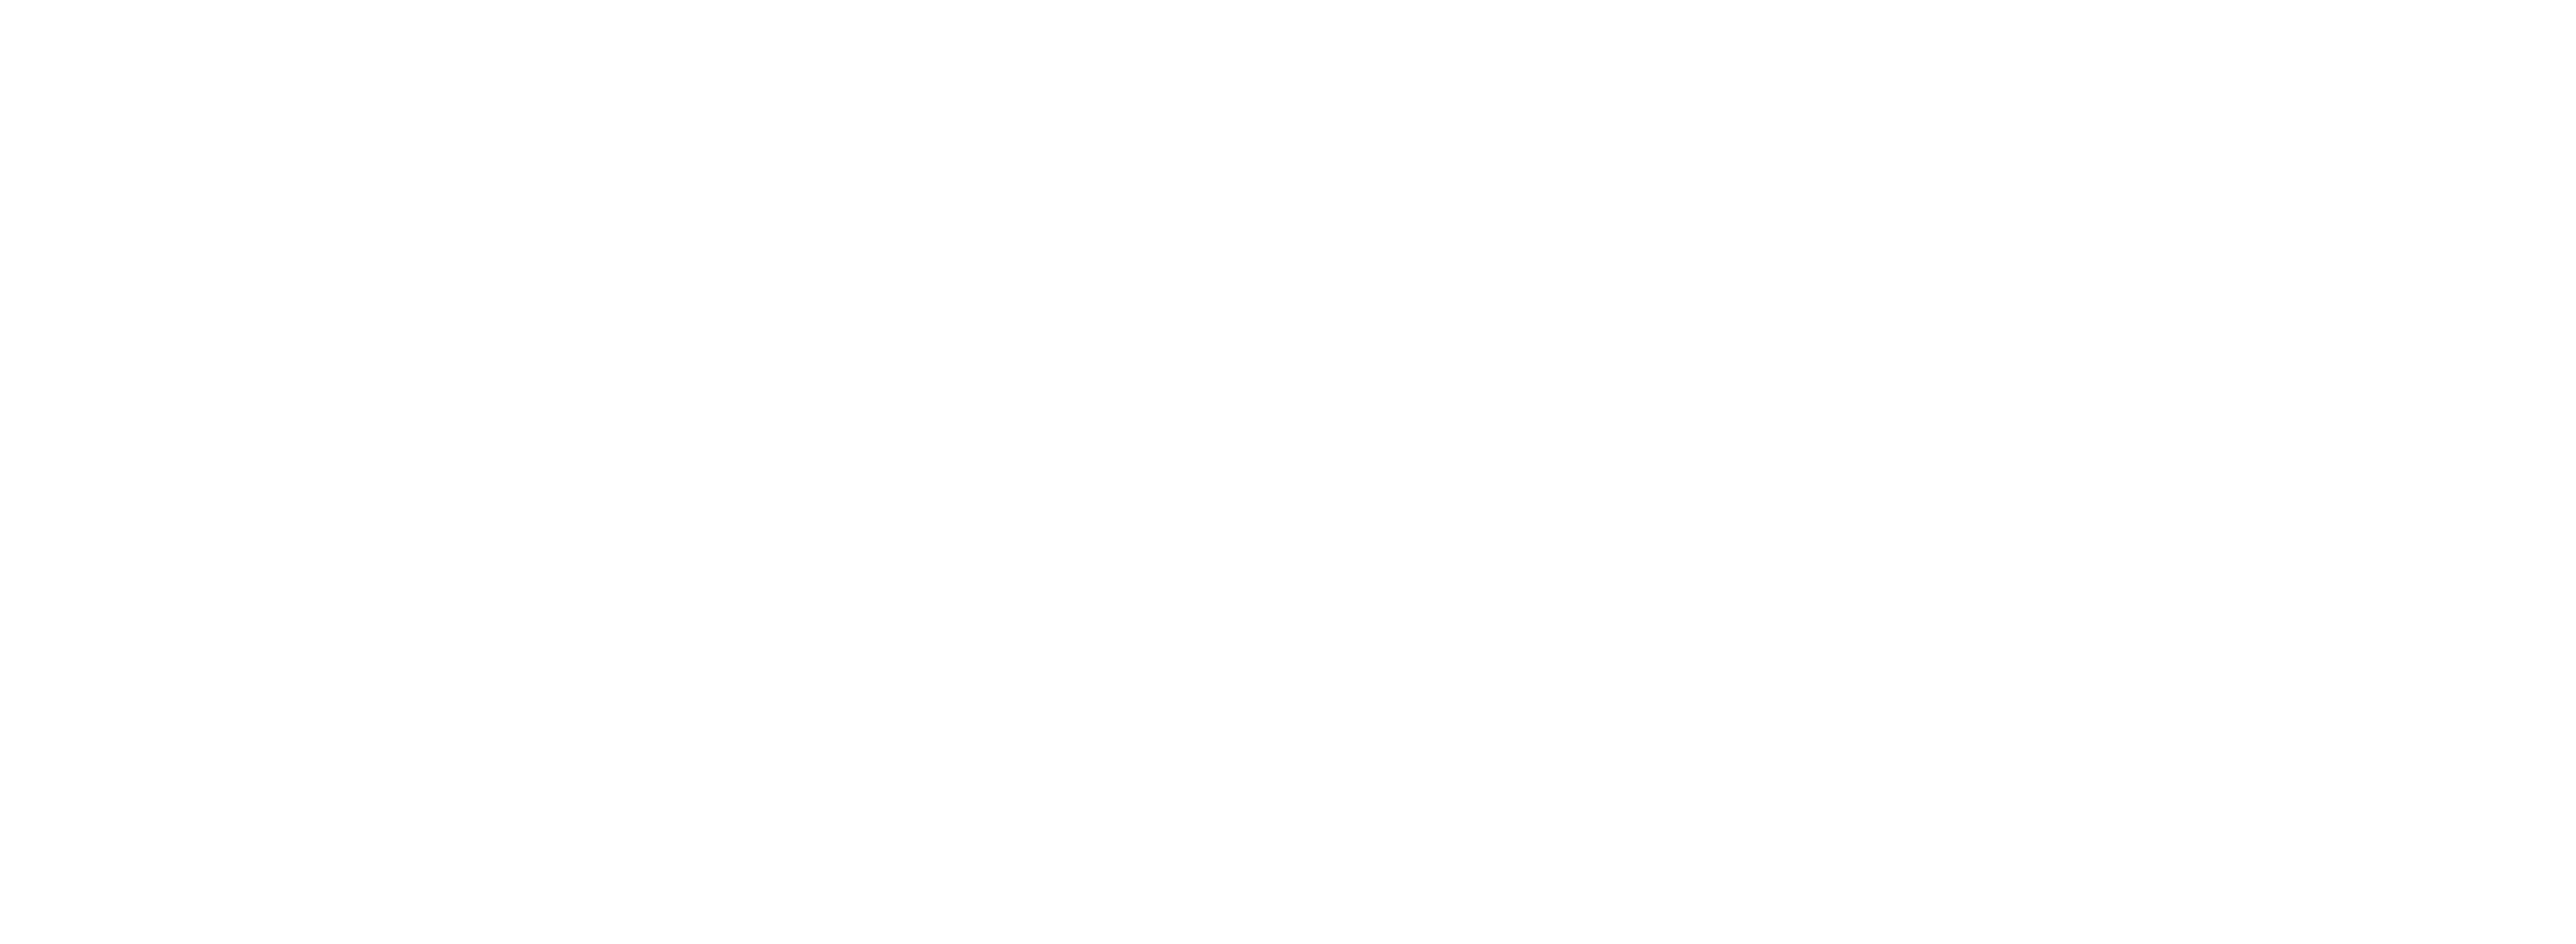 NetBrain logo